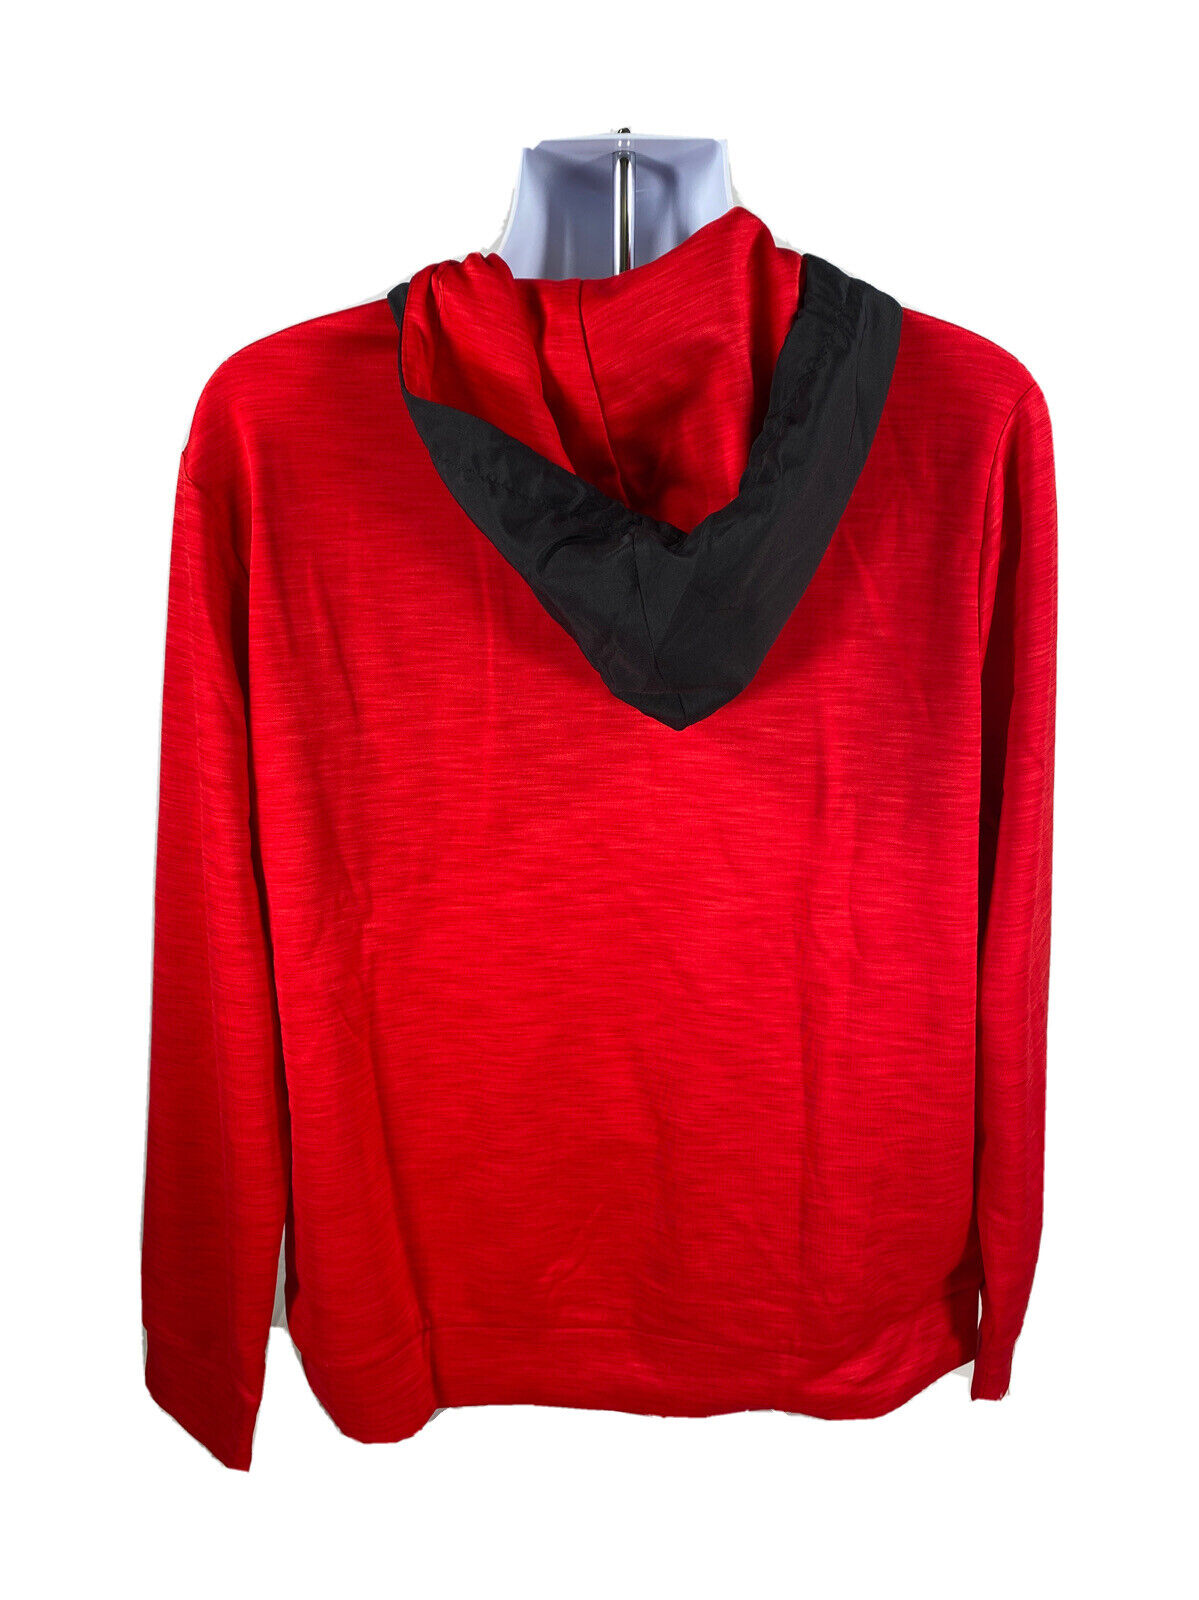 NEW Tek Gear Mens Black/Red Fleece Lined 1/4 Zip Pullover Sweatshirt Sz M